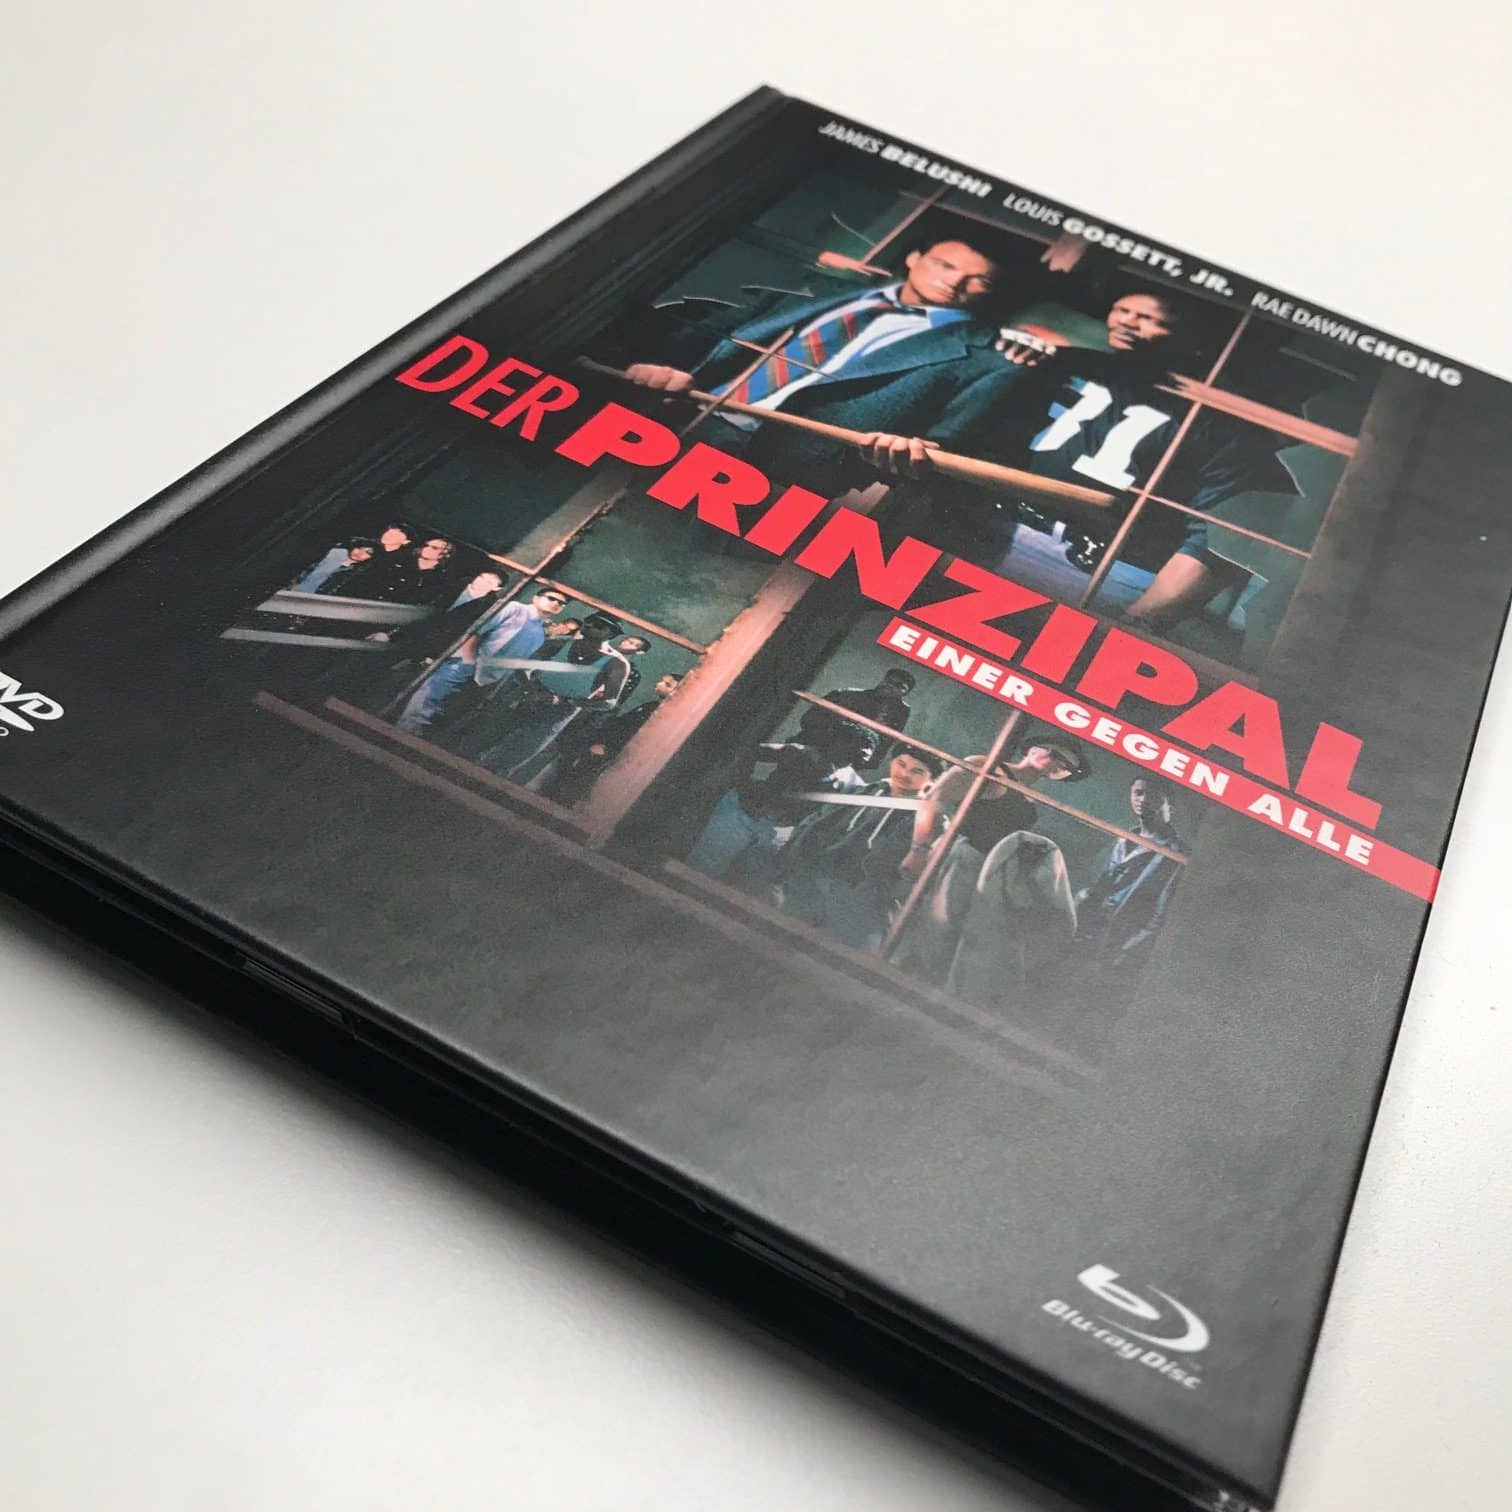 [Review] Der Prinzipal – Einer gegen alle Blu-ray im Mediabook (inkl. DVD)